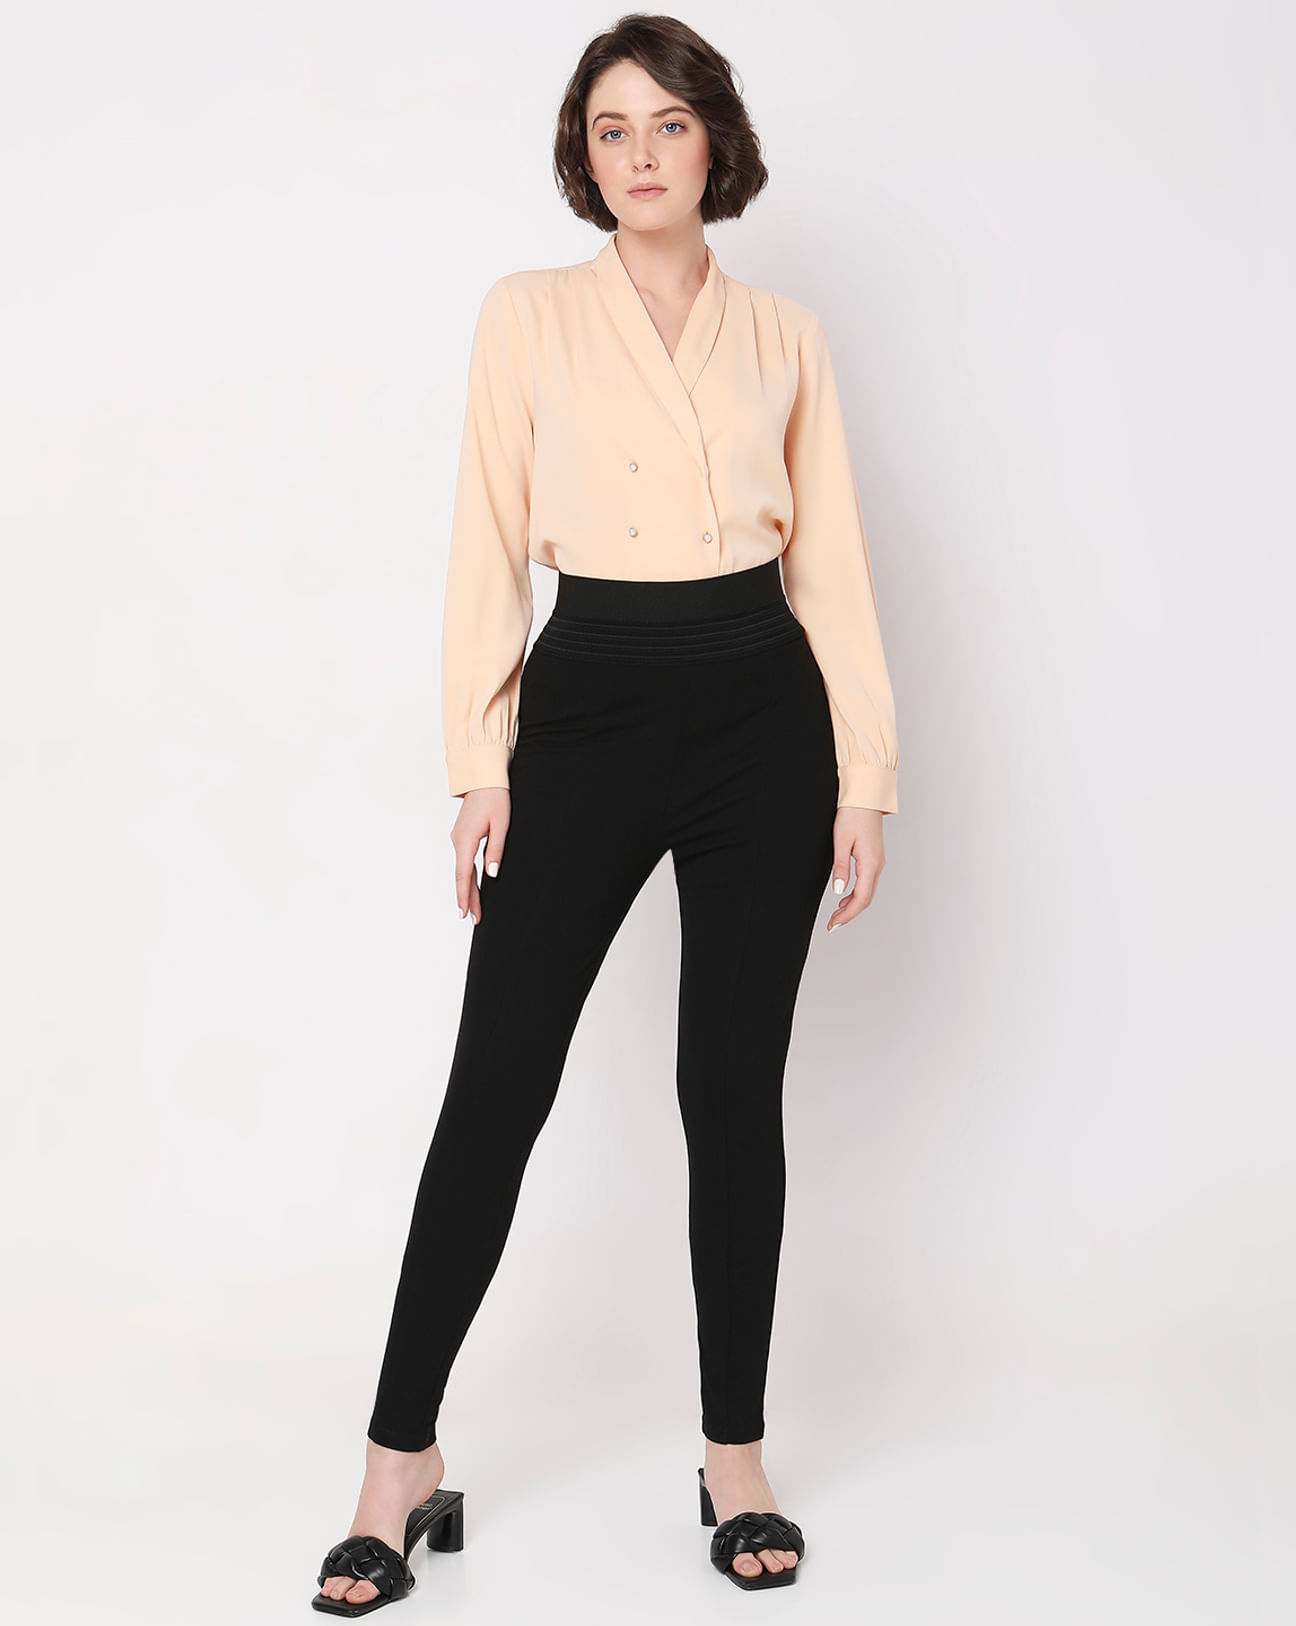 Vero Moda seamless longline shapewear shorts in black